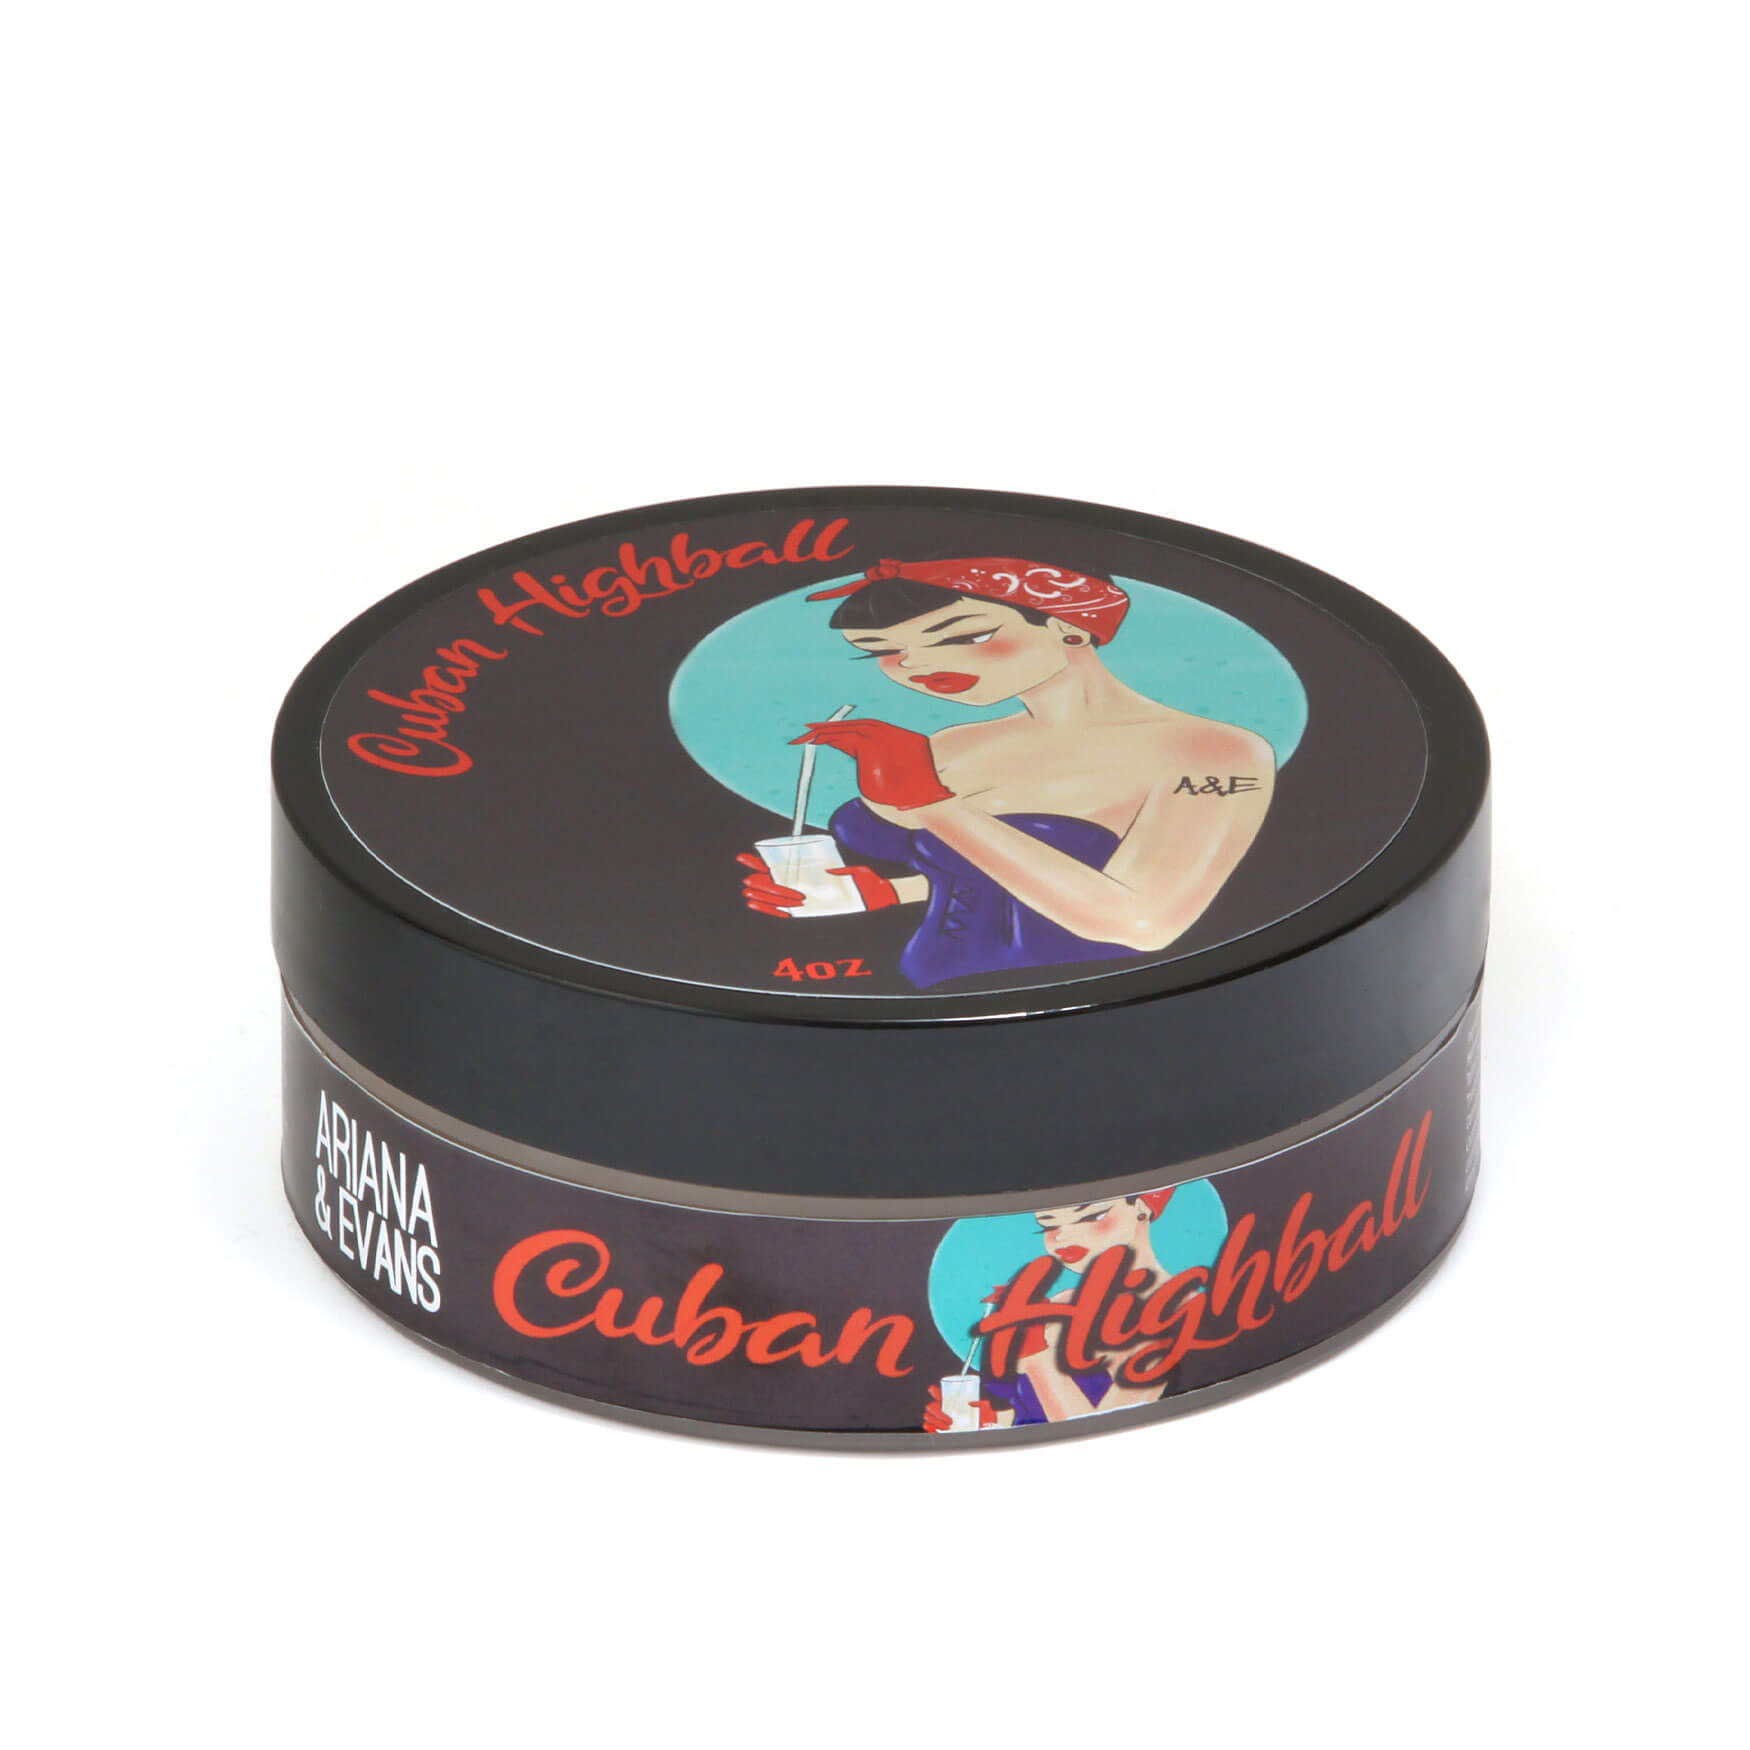 Ariana & Evans Cuban Highball Shaving Soap